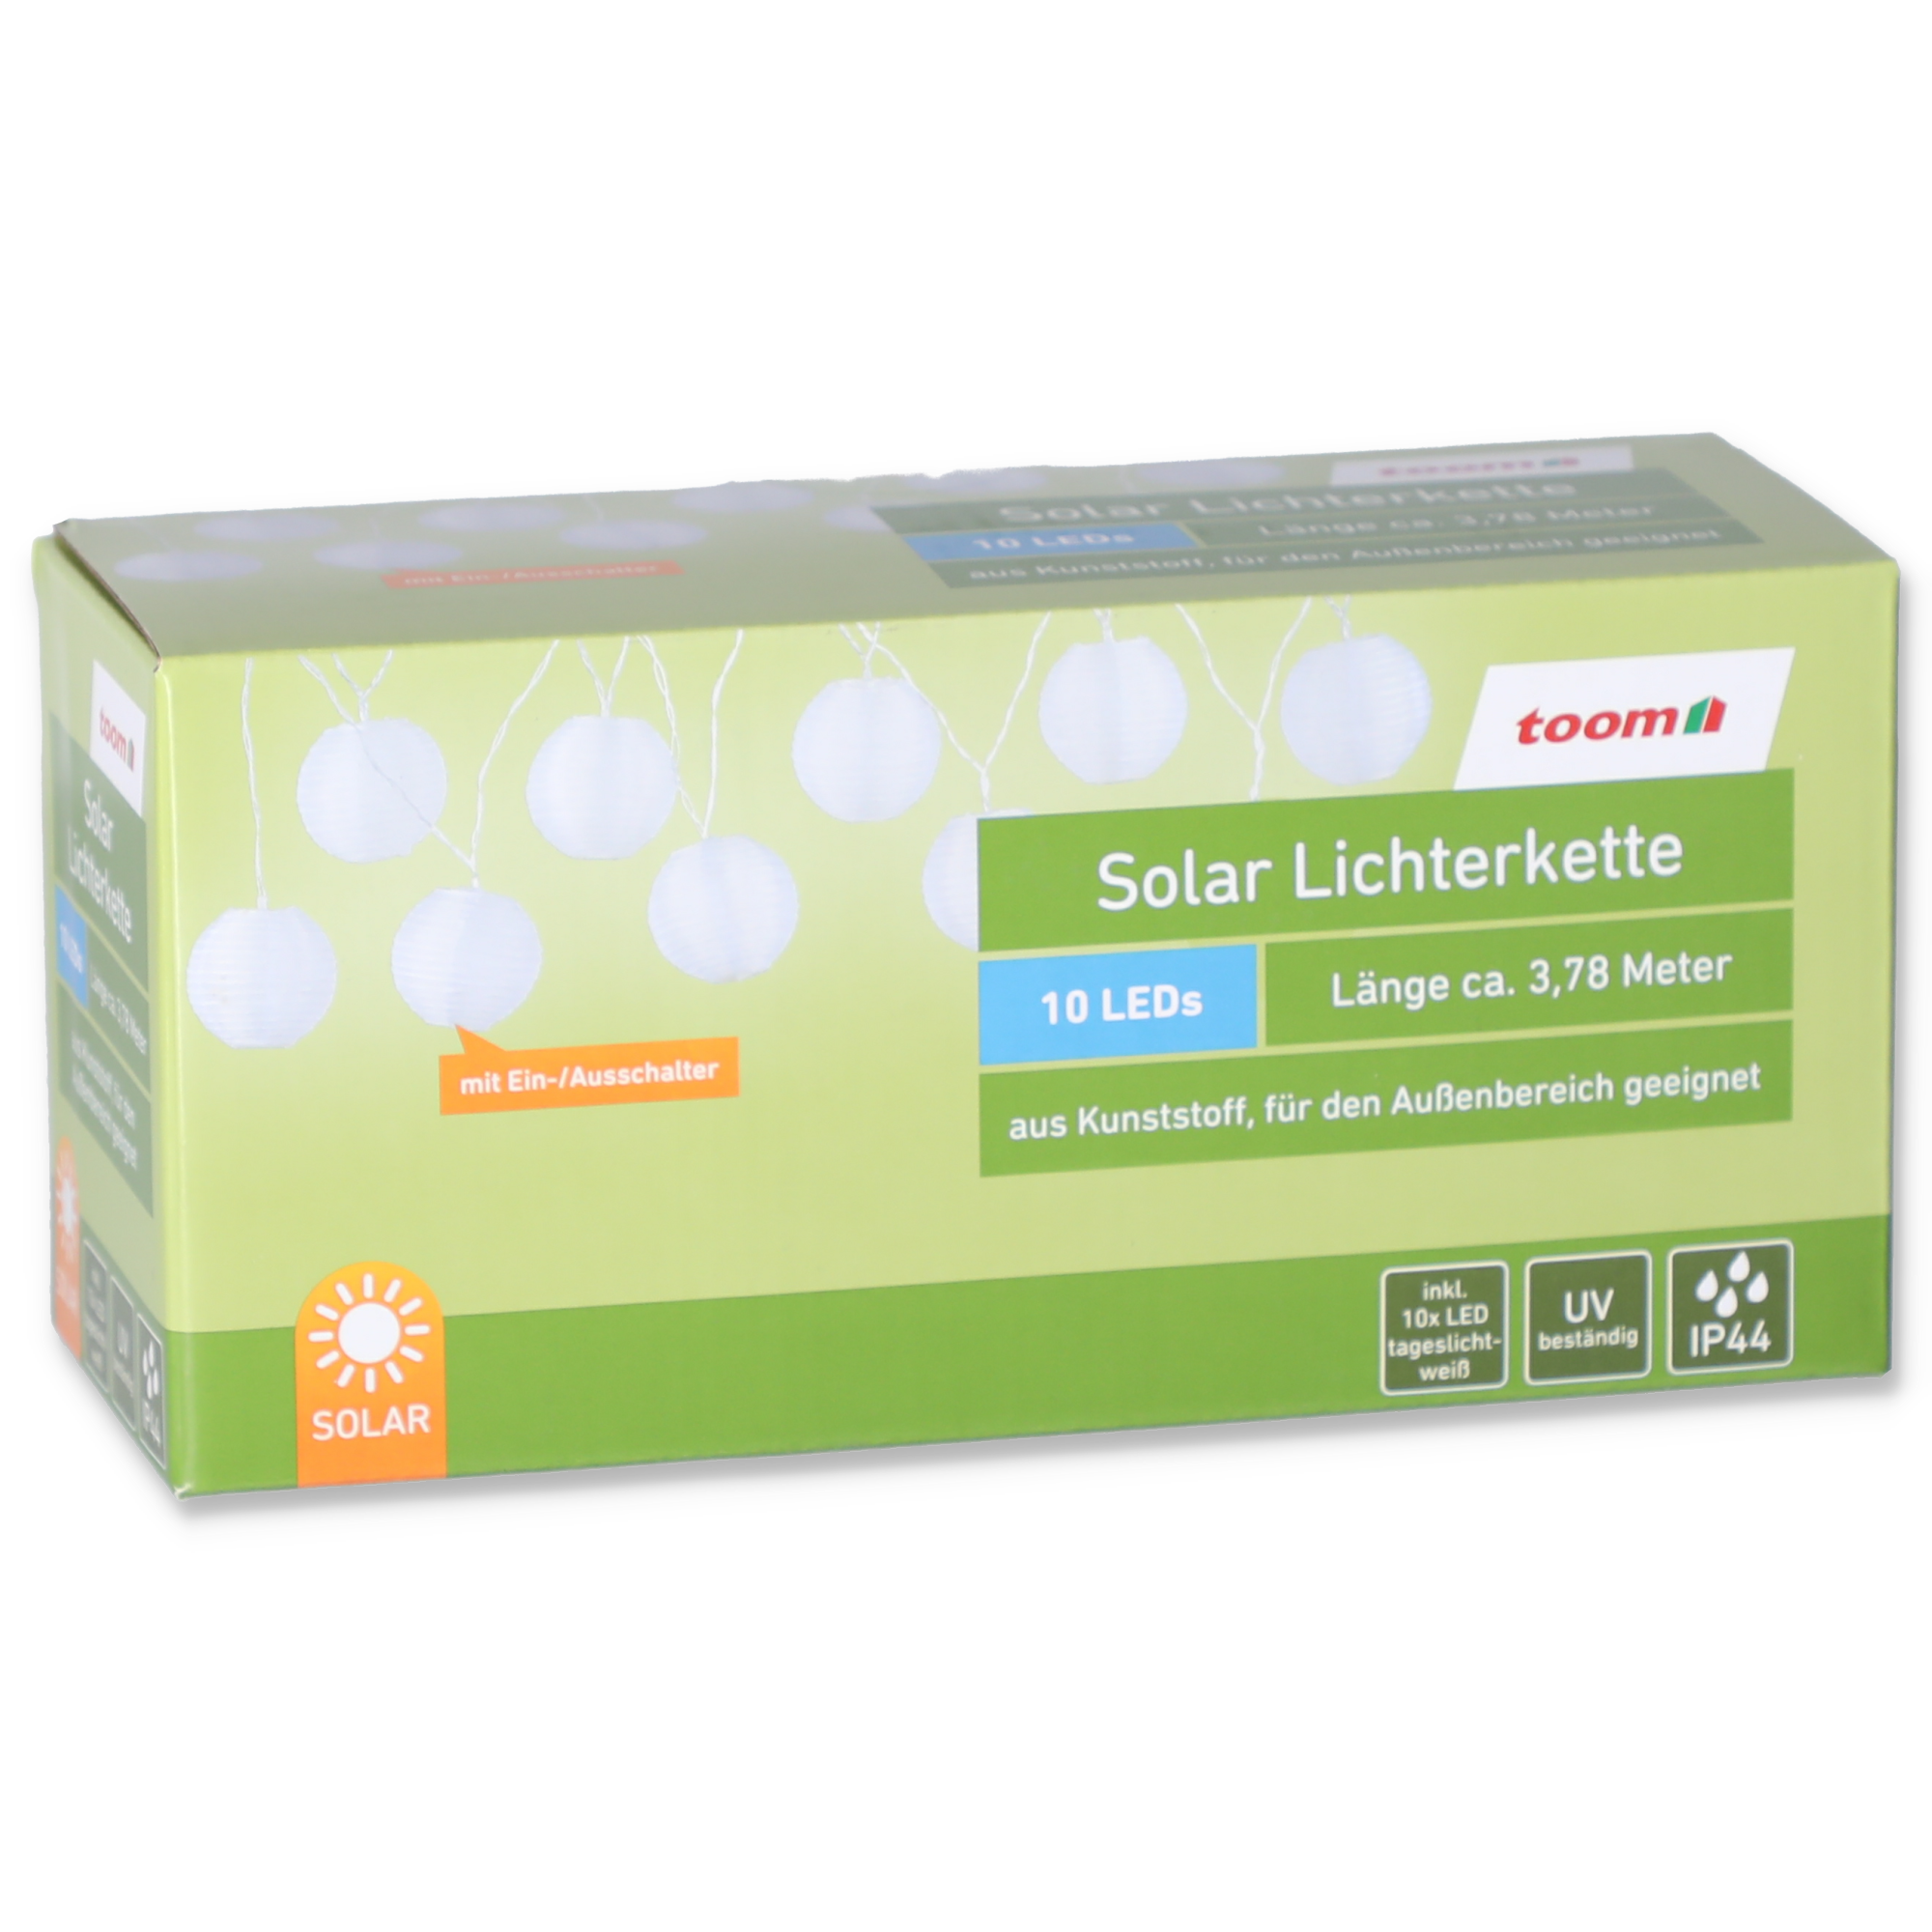 Solar-Lichterkette 'Lampion' 378 cm weiß + product picture